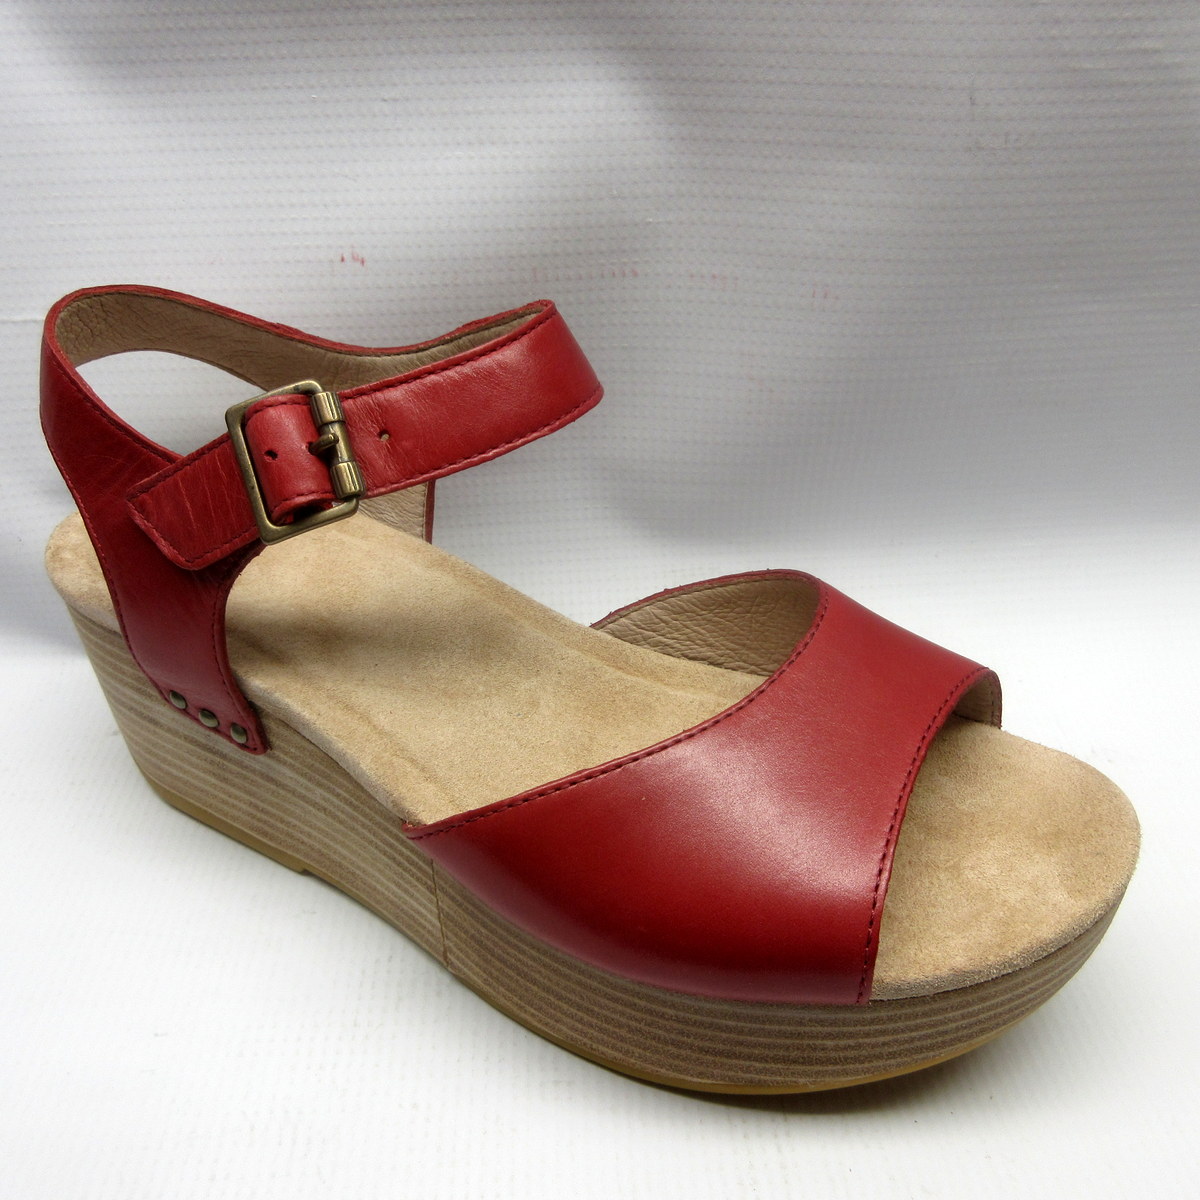 dansko red sandals